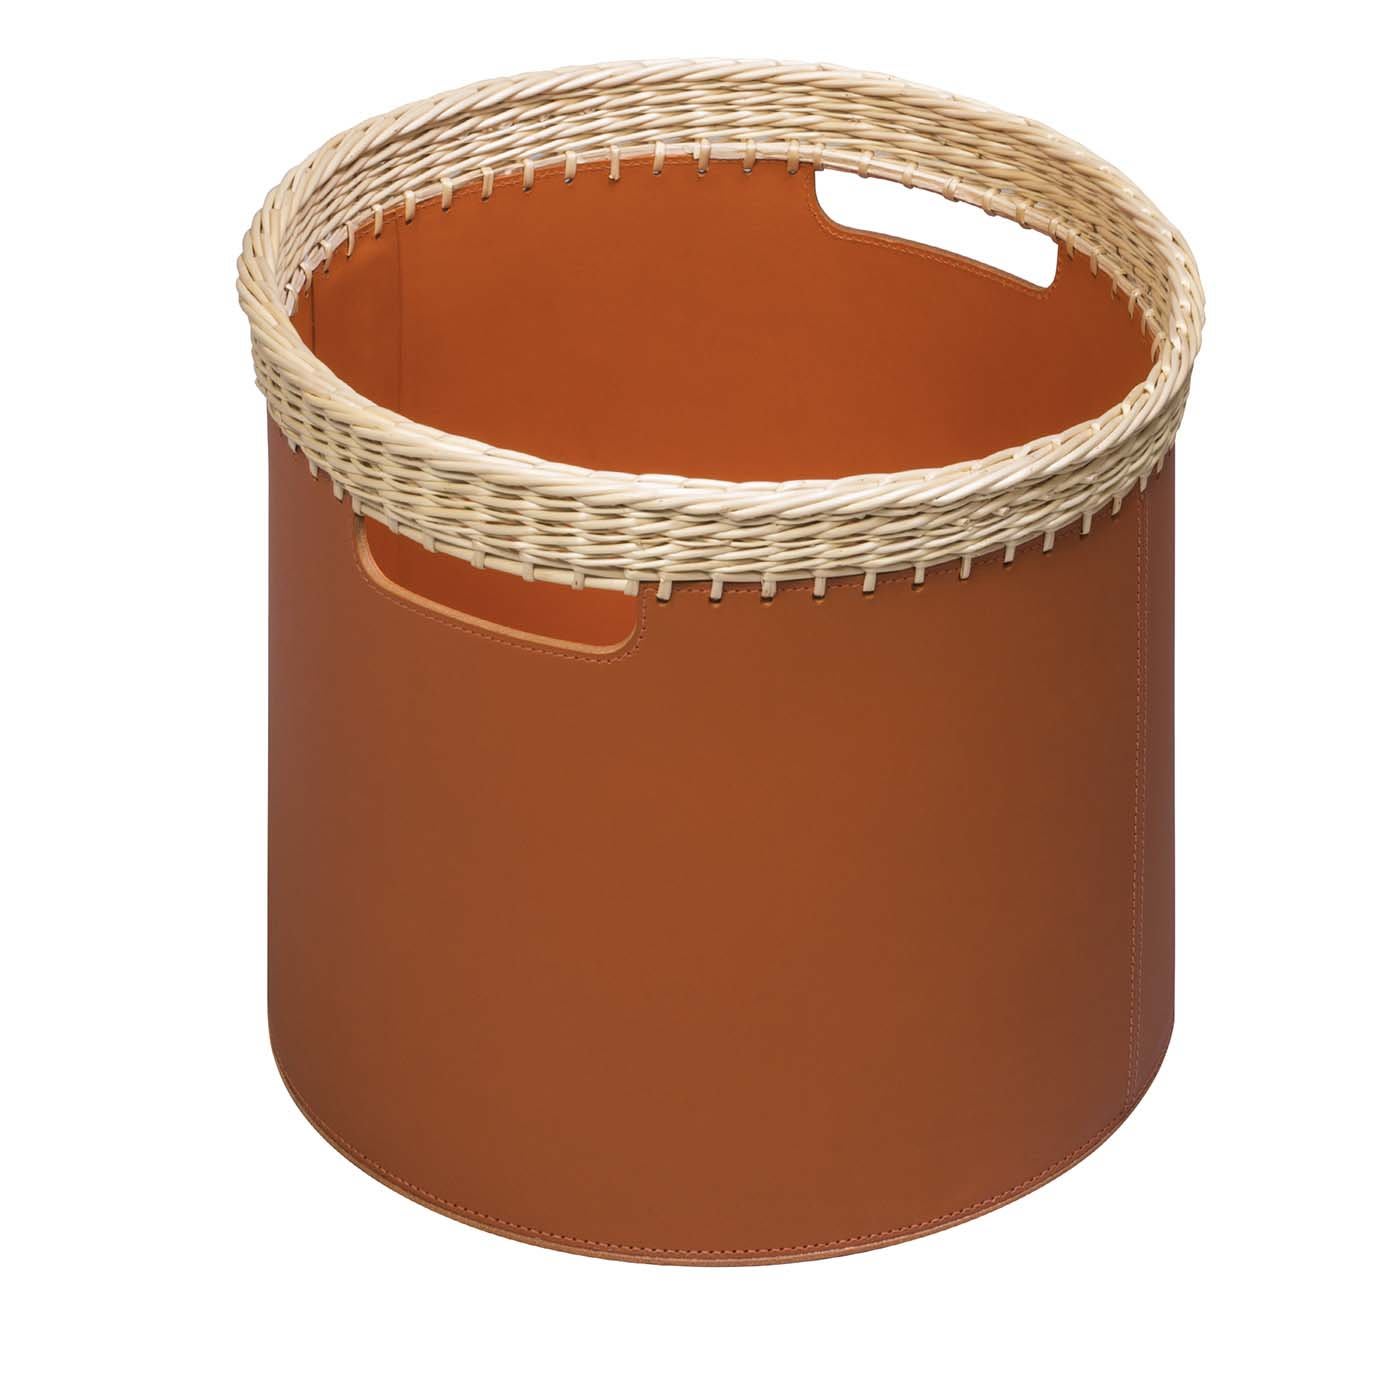 Como Small Round Basket in Cognac Leather - Rabitti 1969